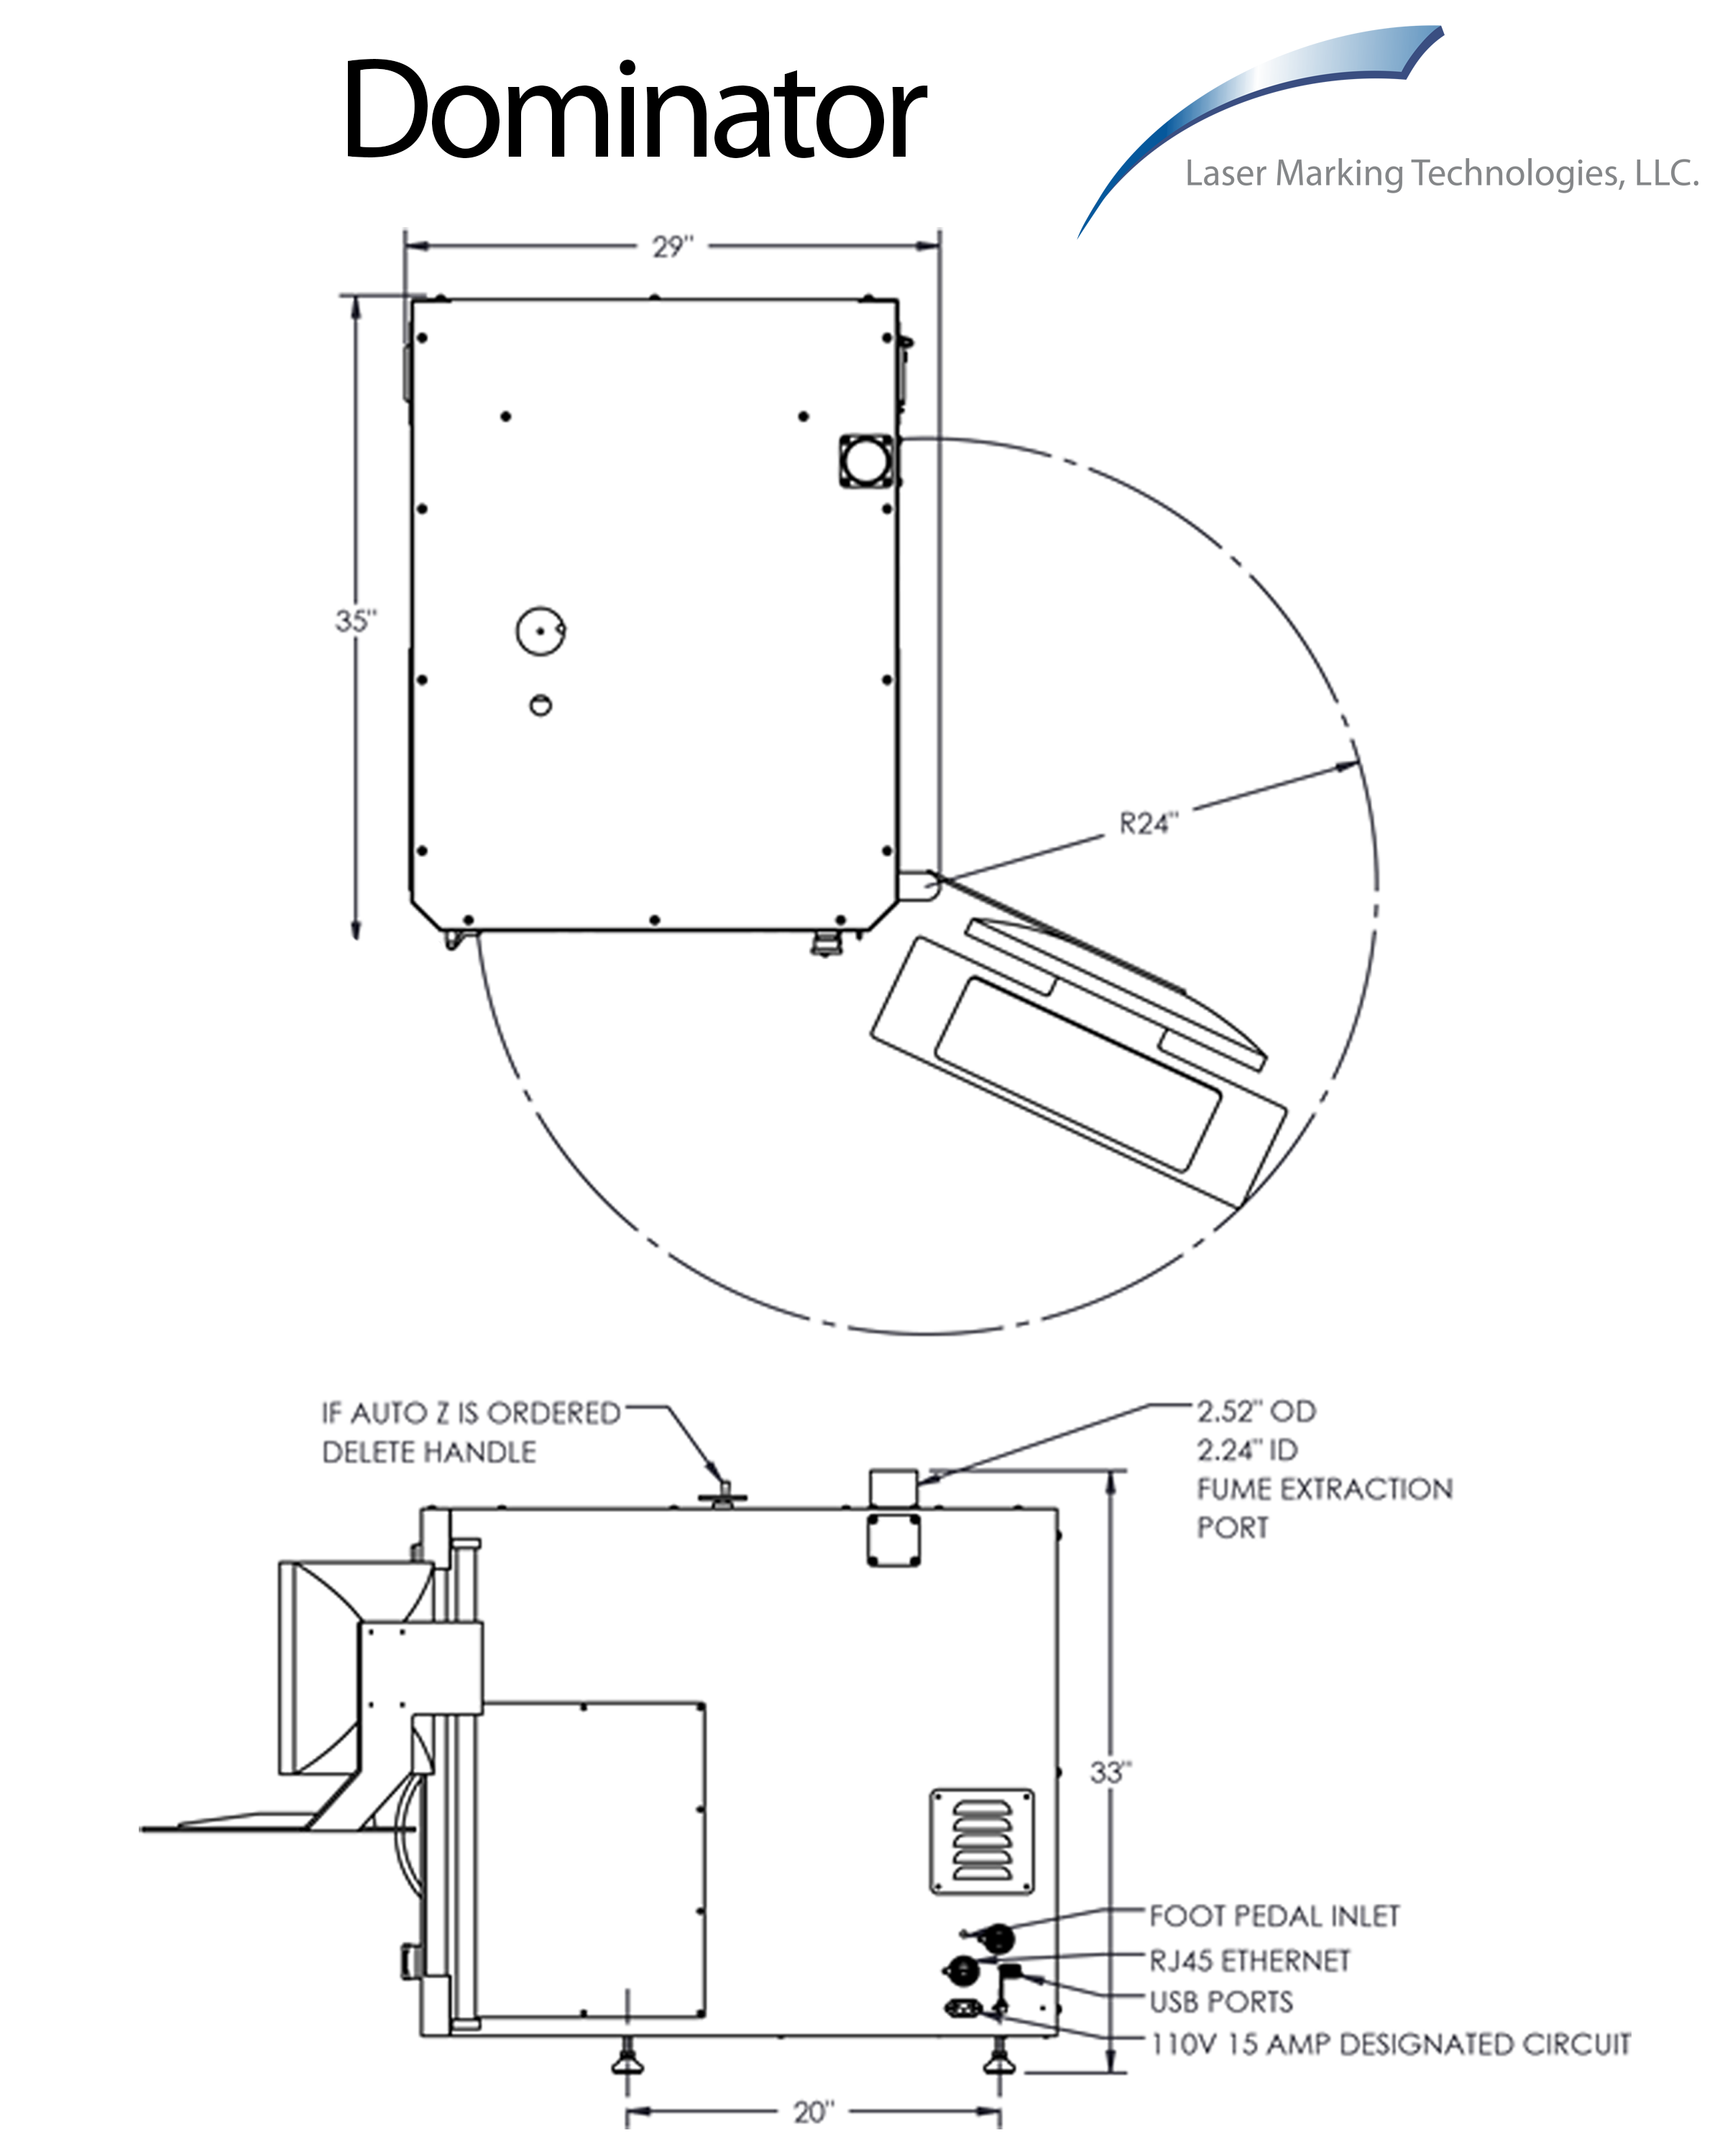 Dominator laser marking machine layout and diagram